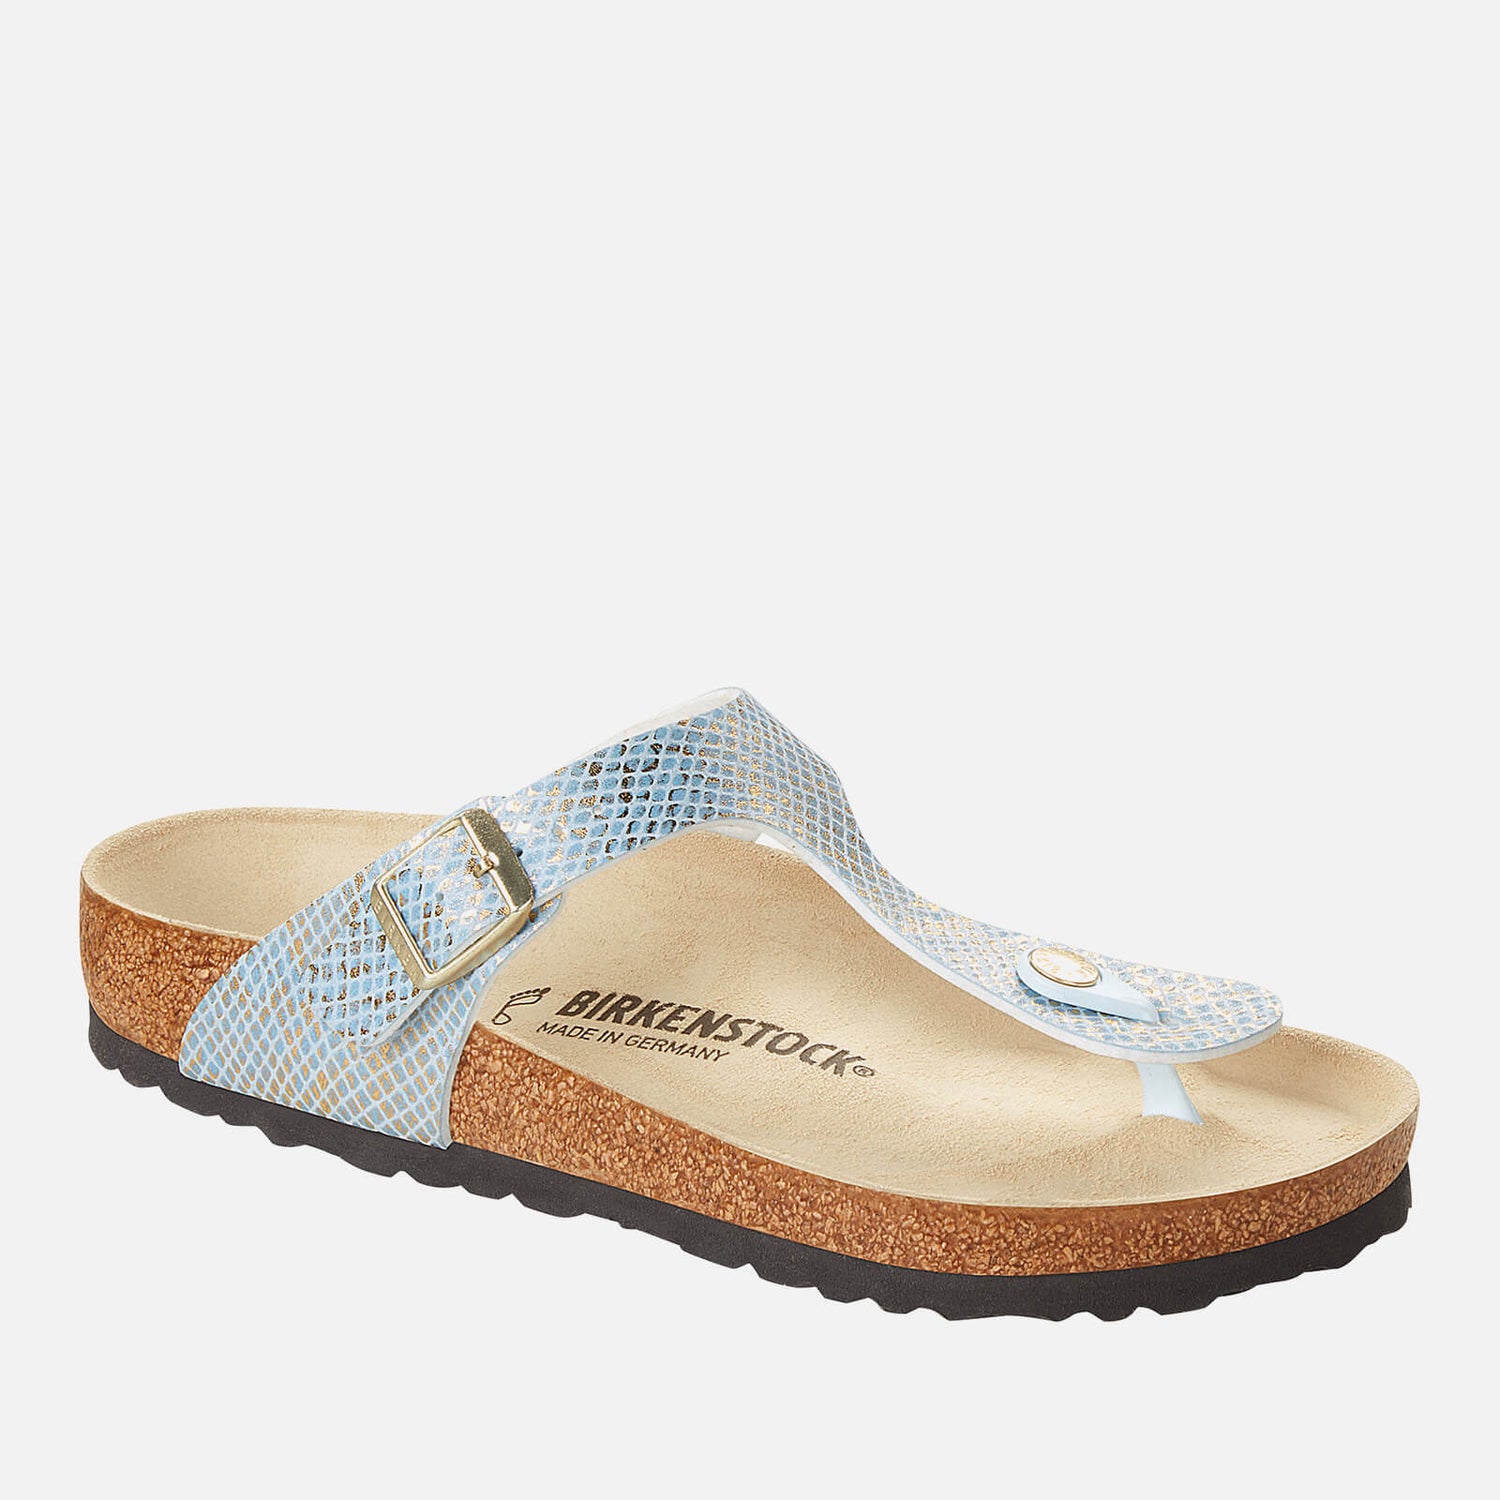 Birkenstock Women's Gizeh Slim Fit Shiny Python Toe Post Sandals - Dusty Blue - EU 36/UK 3.5